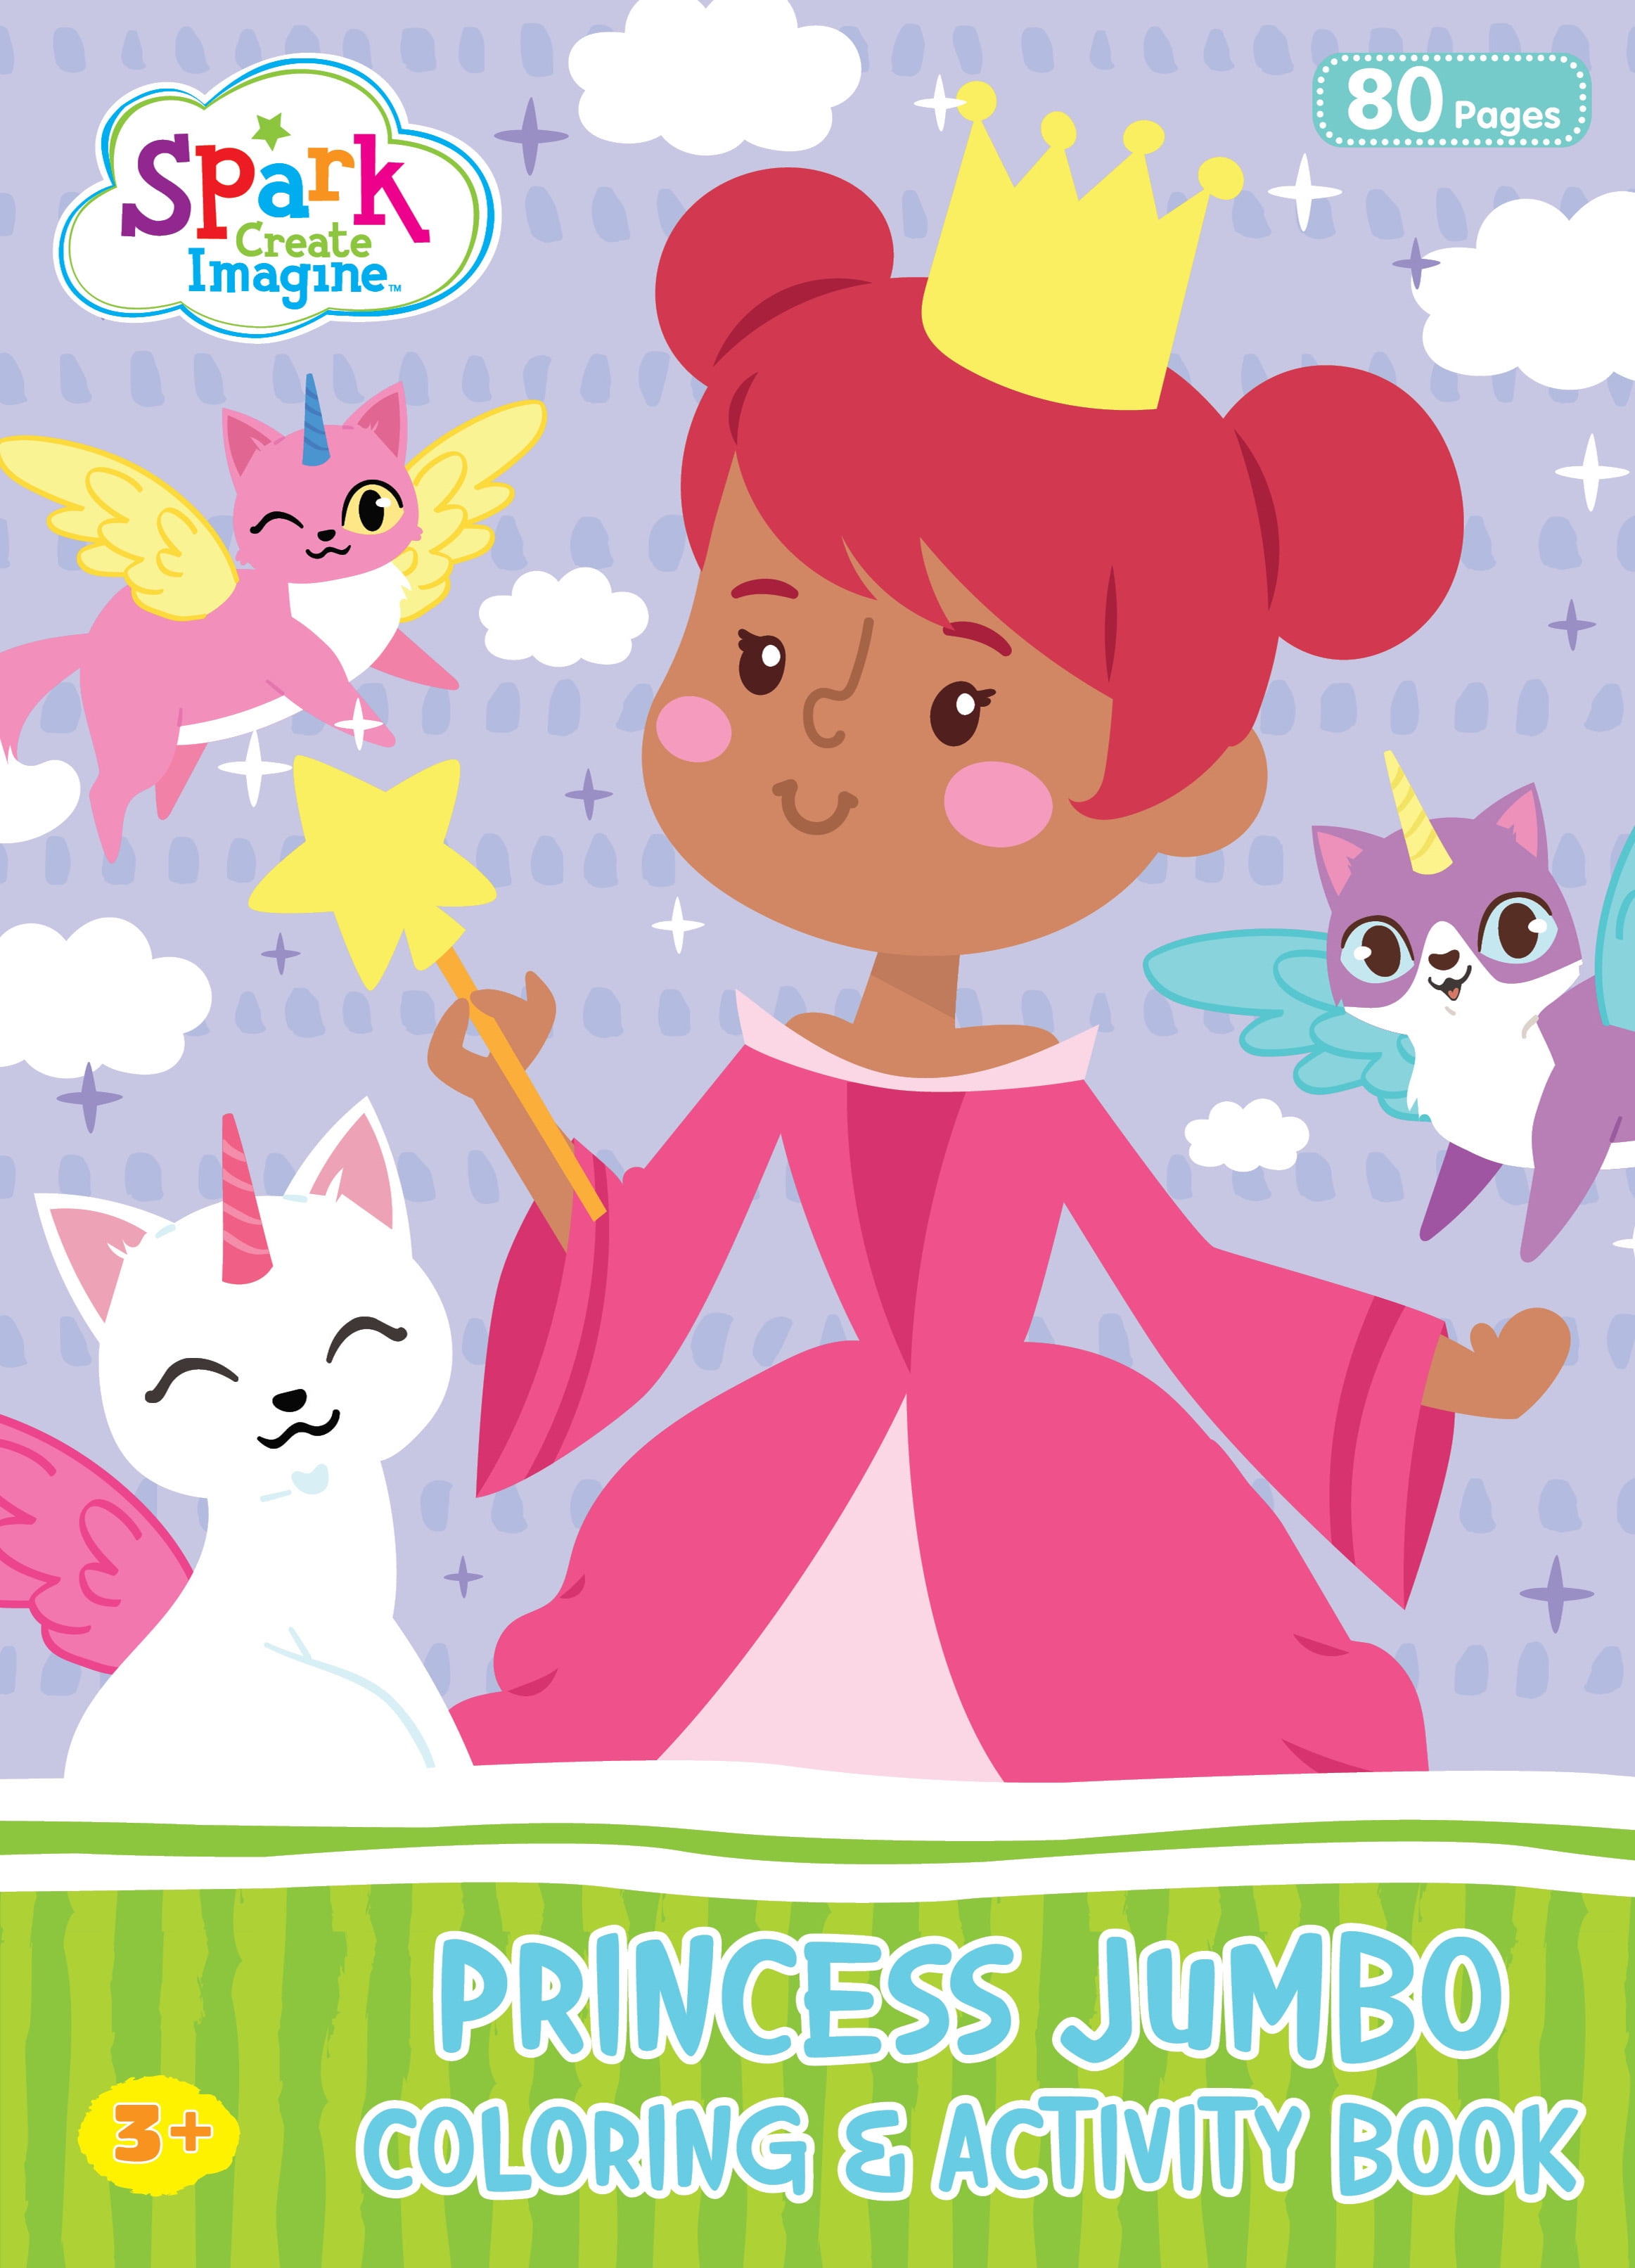 Princess Jumbo Coloring & Activity Book, 21 Pages